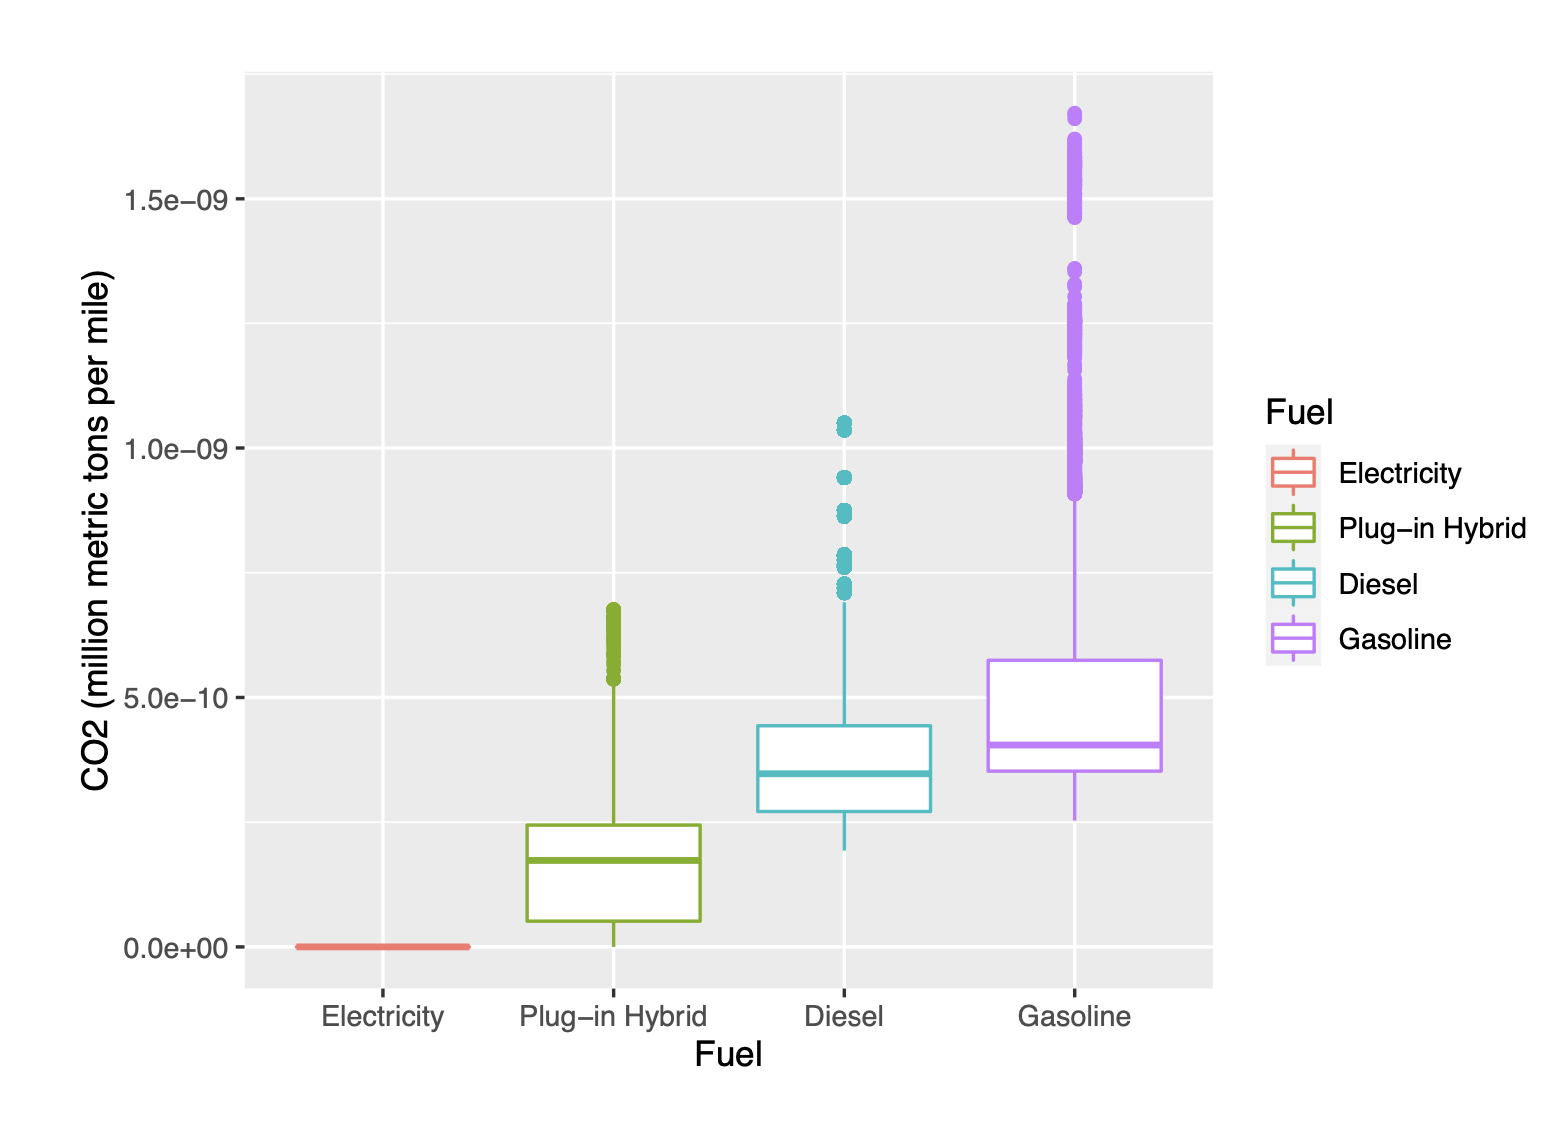 Box plot of fuel emissions